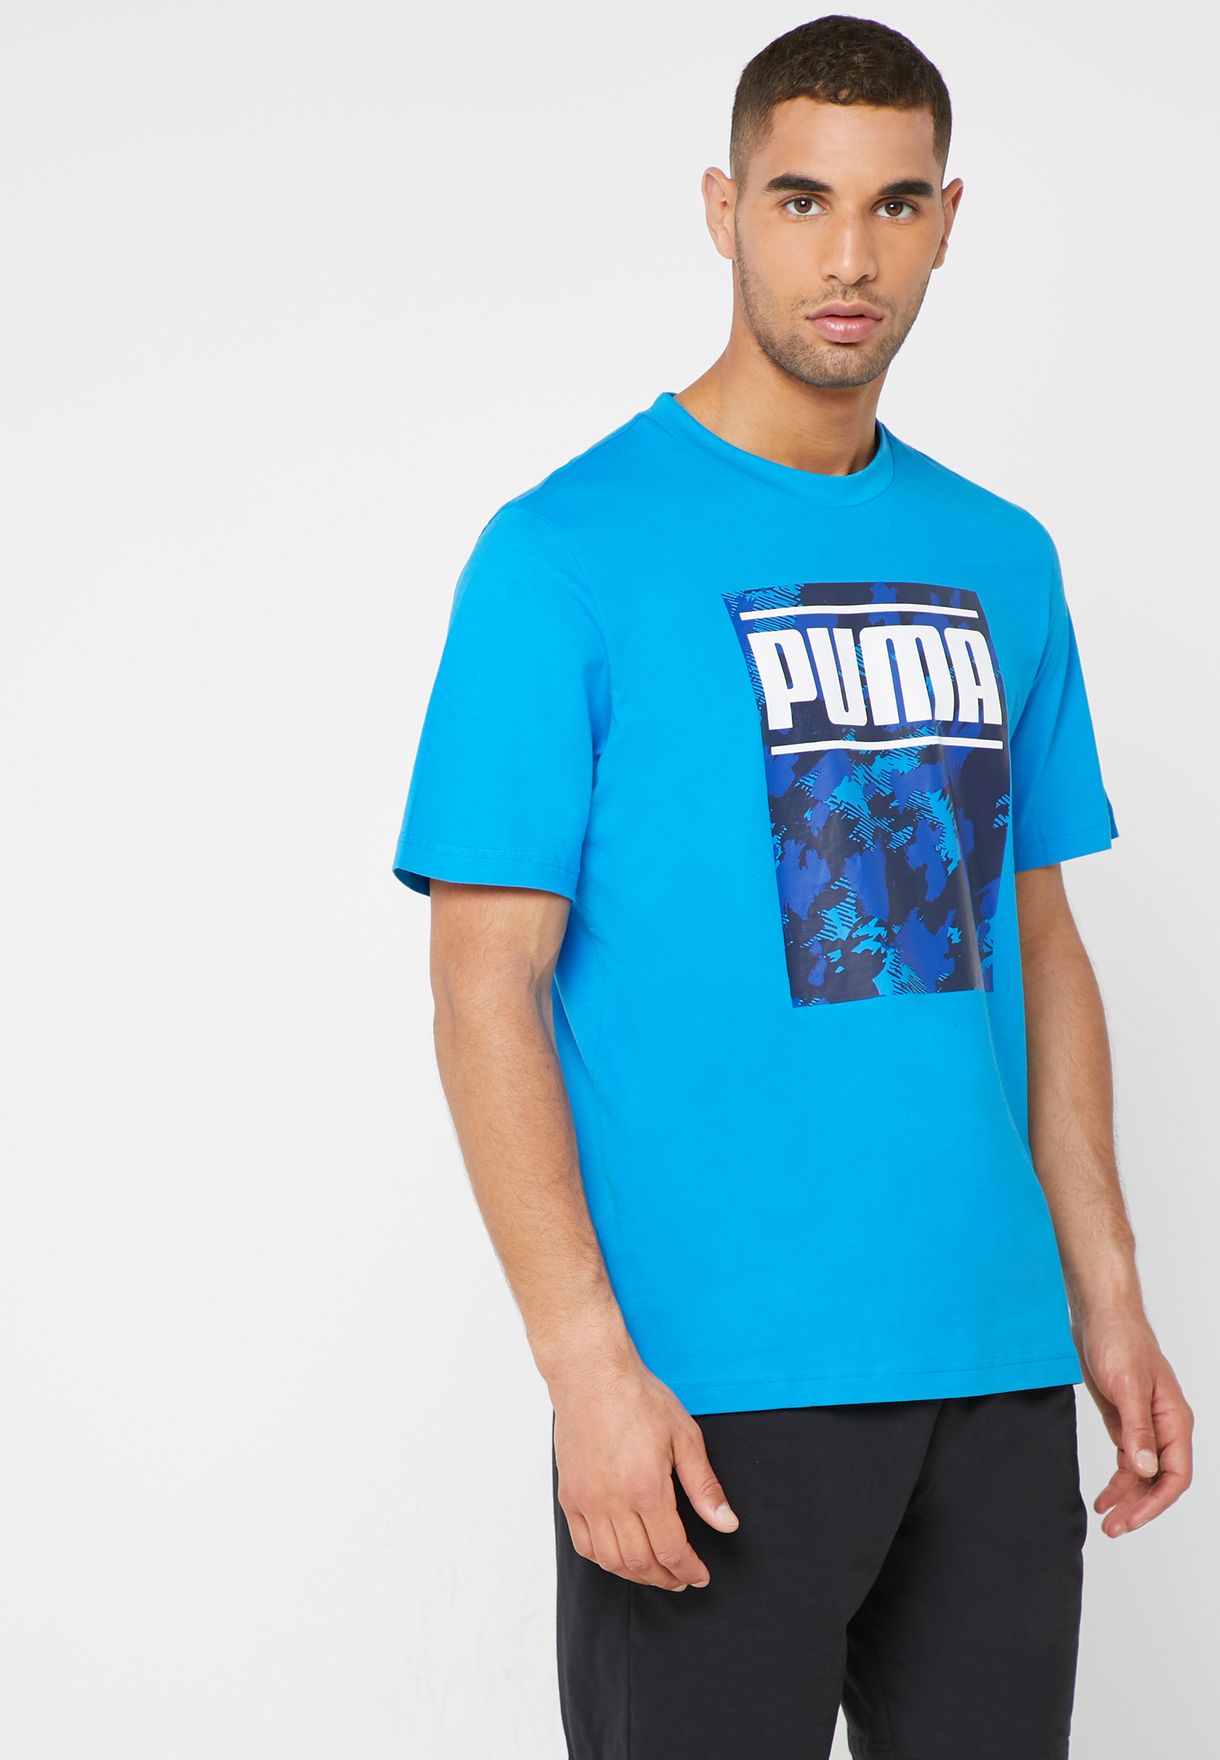 puma blue shirt